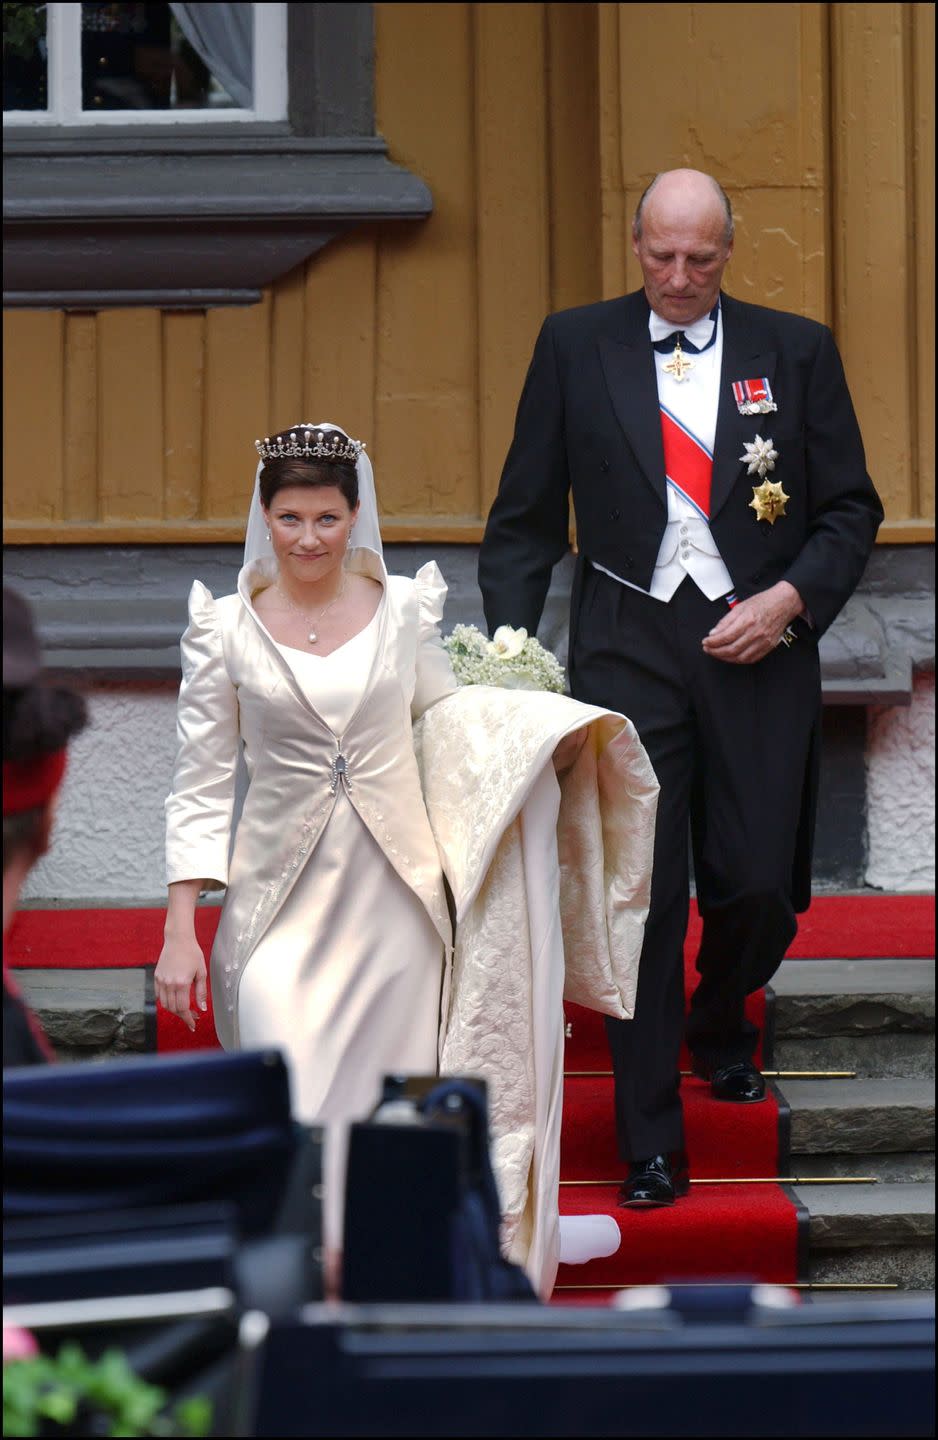 wedding of princess martha louise and ari behn in trondheim, norway on may 24, 2002